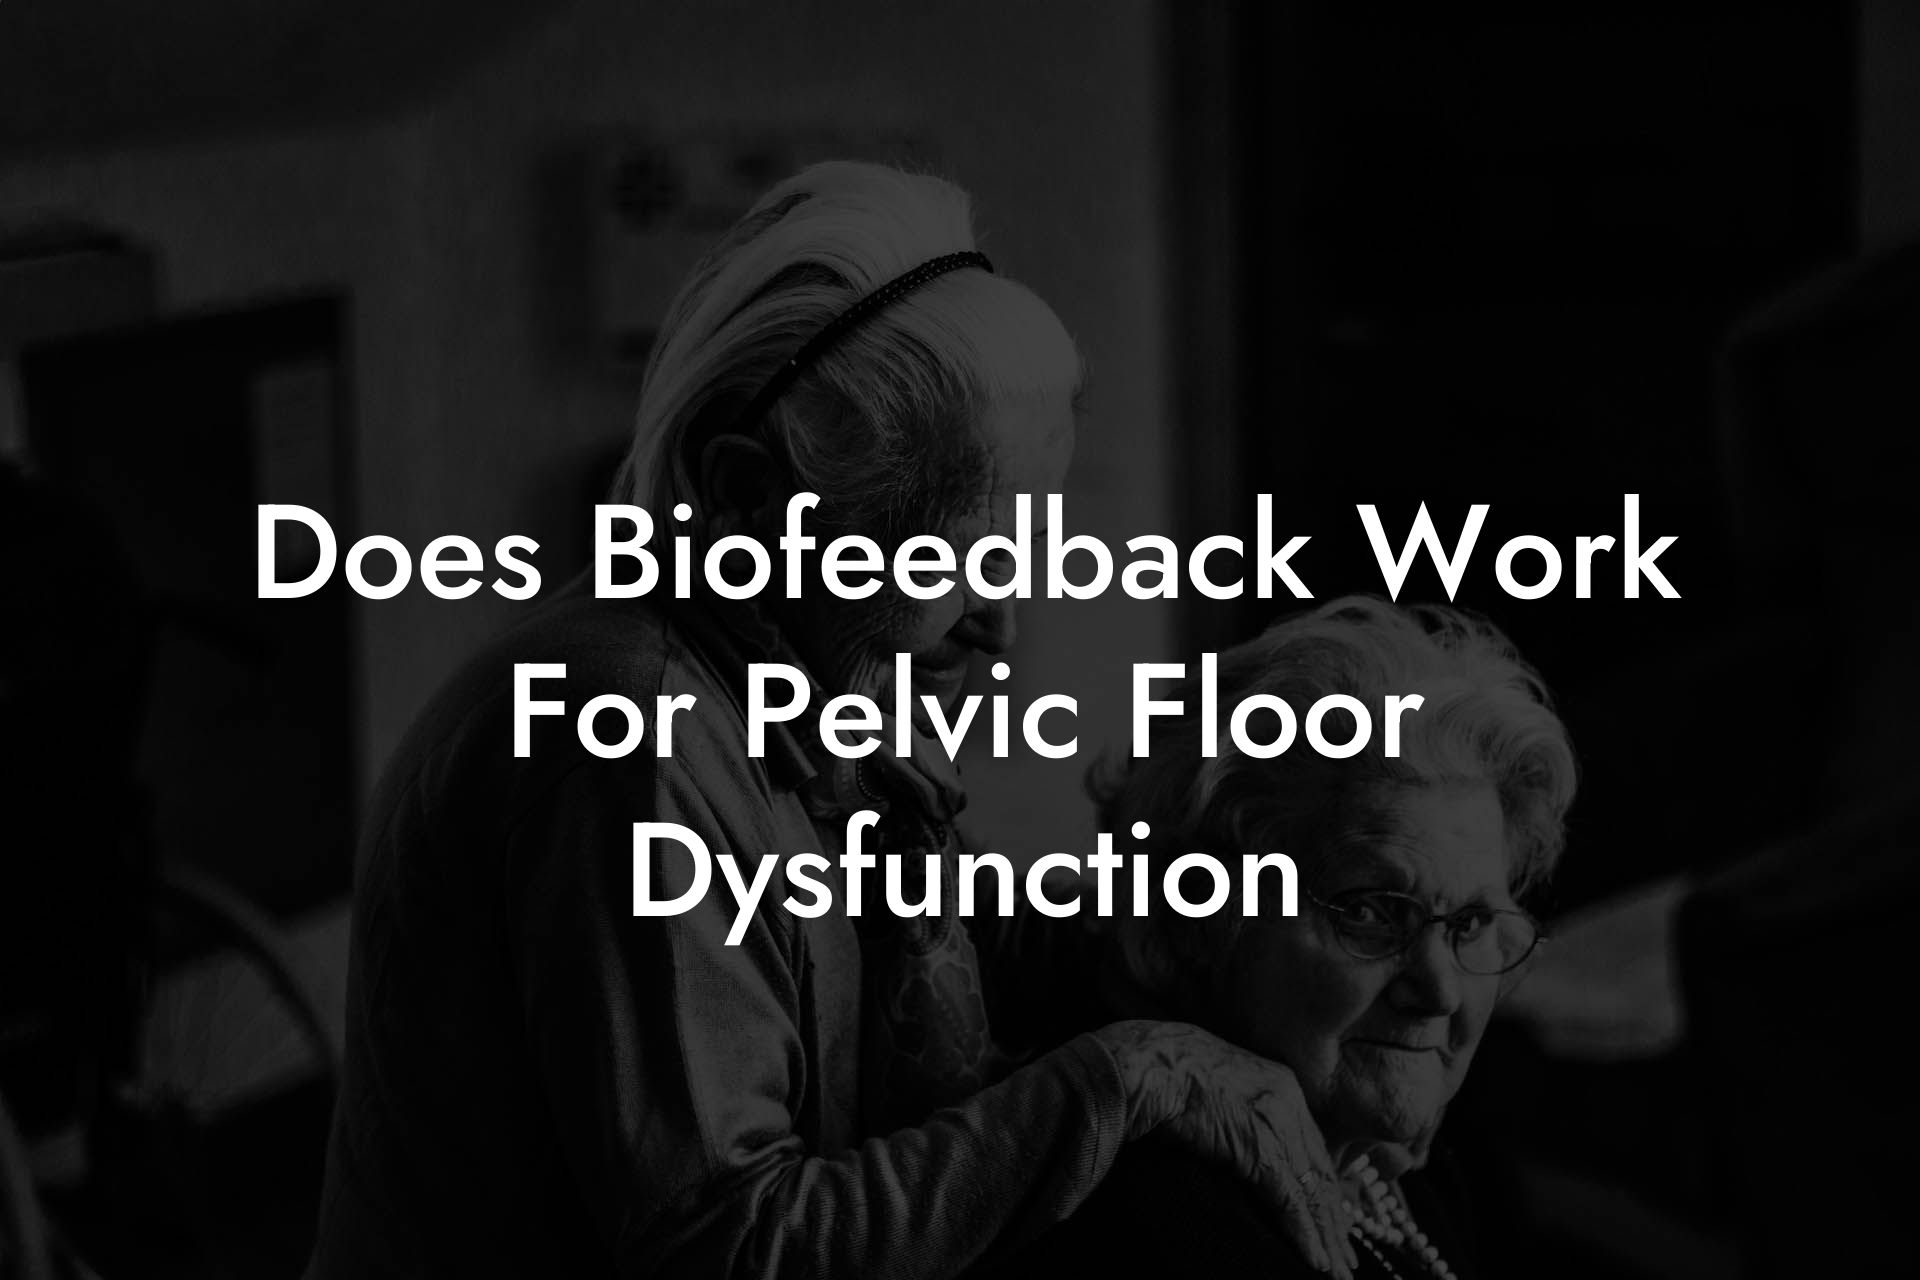 Does Biofeedback Work For Pelvic Floor Dysfunction?